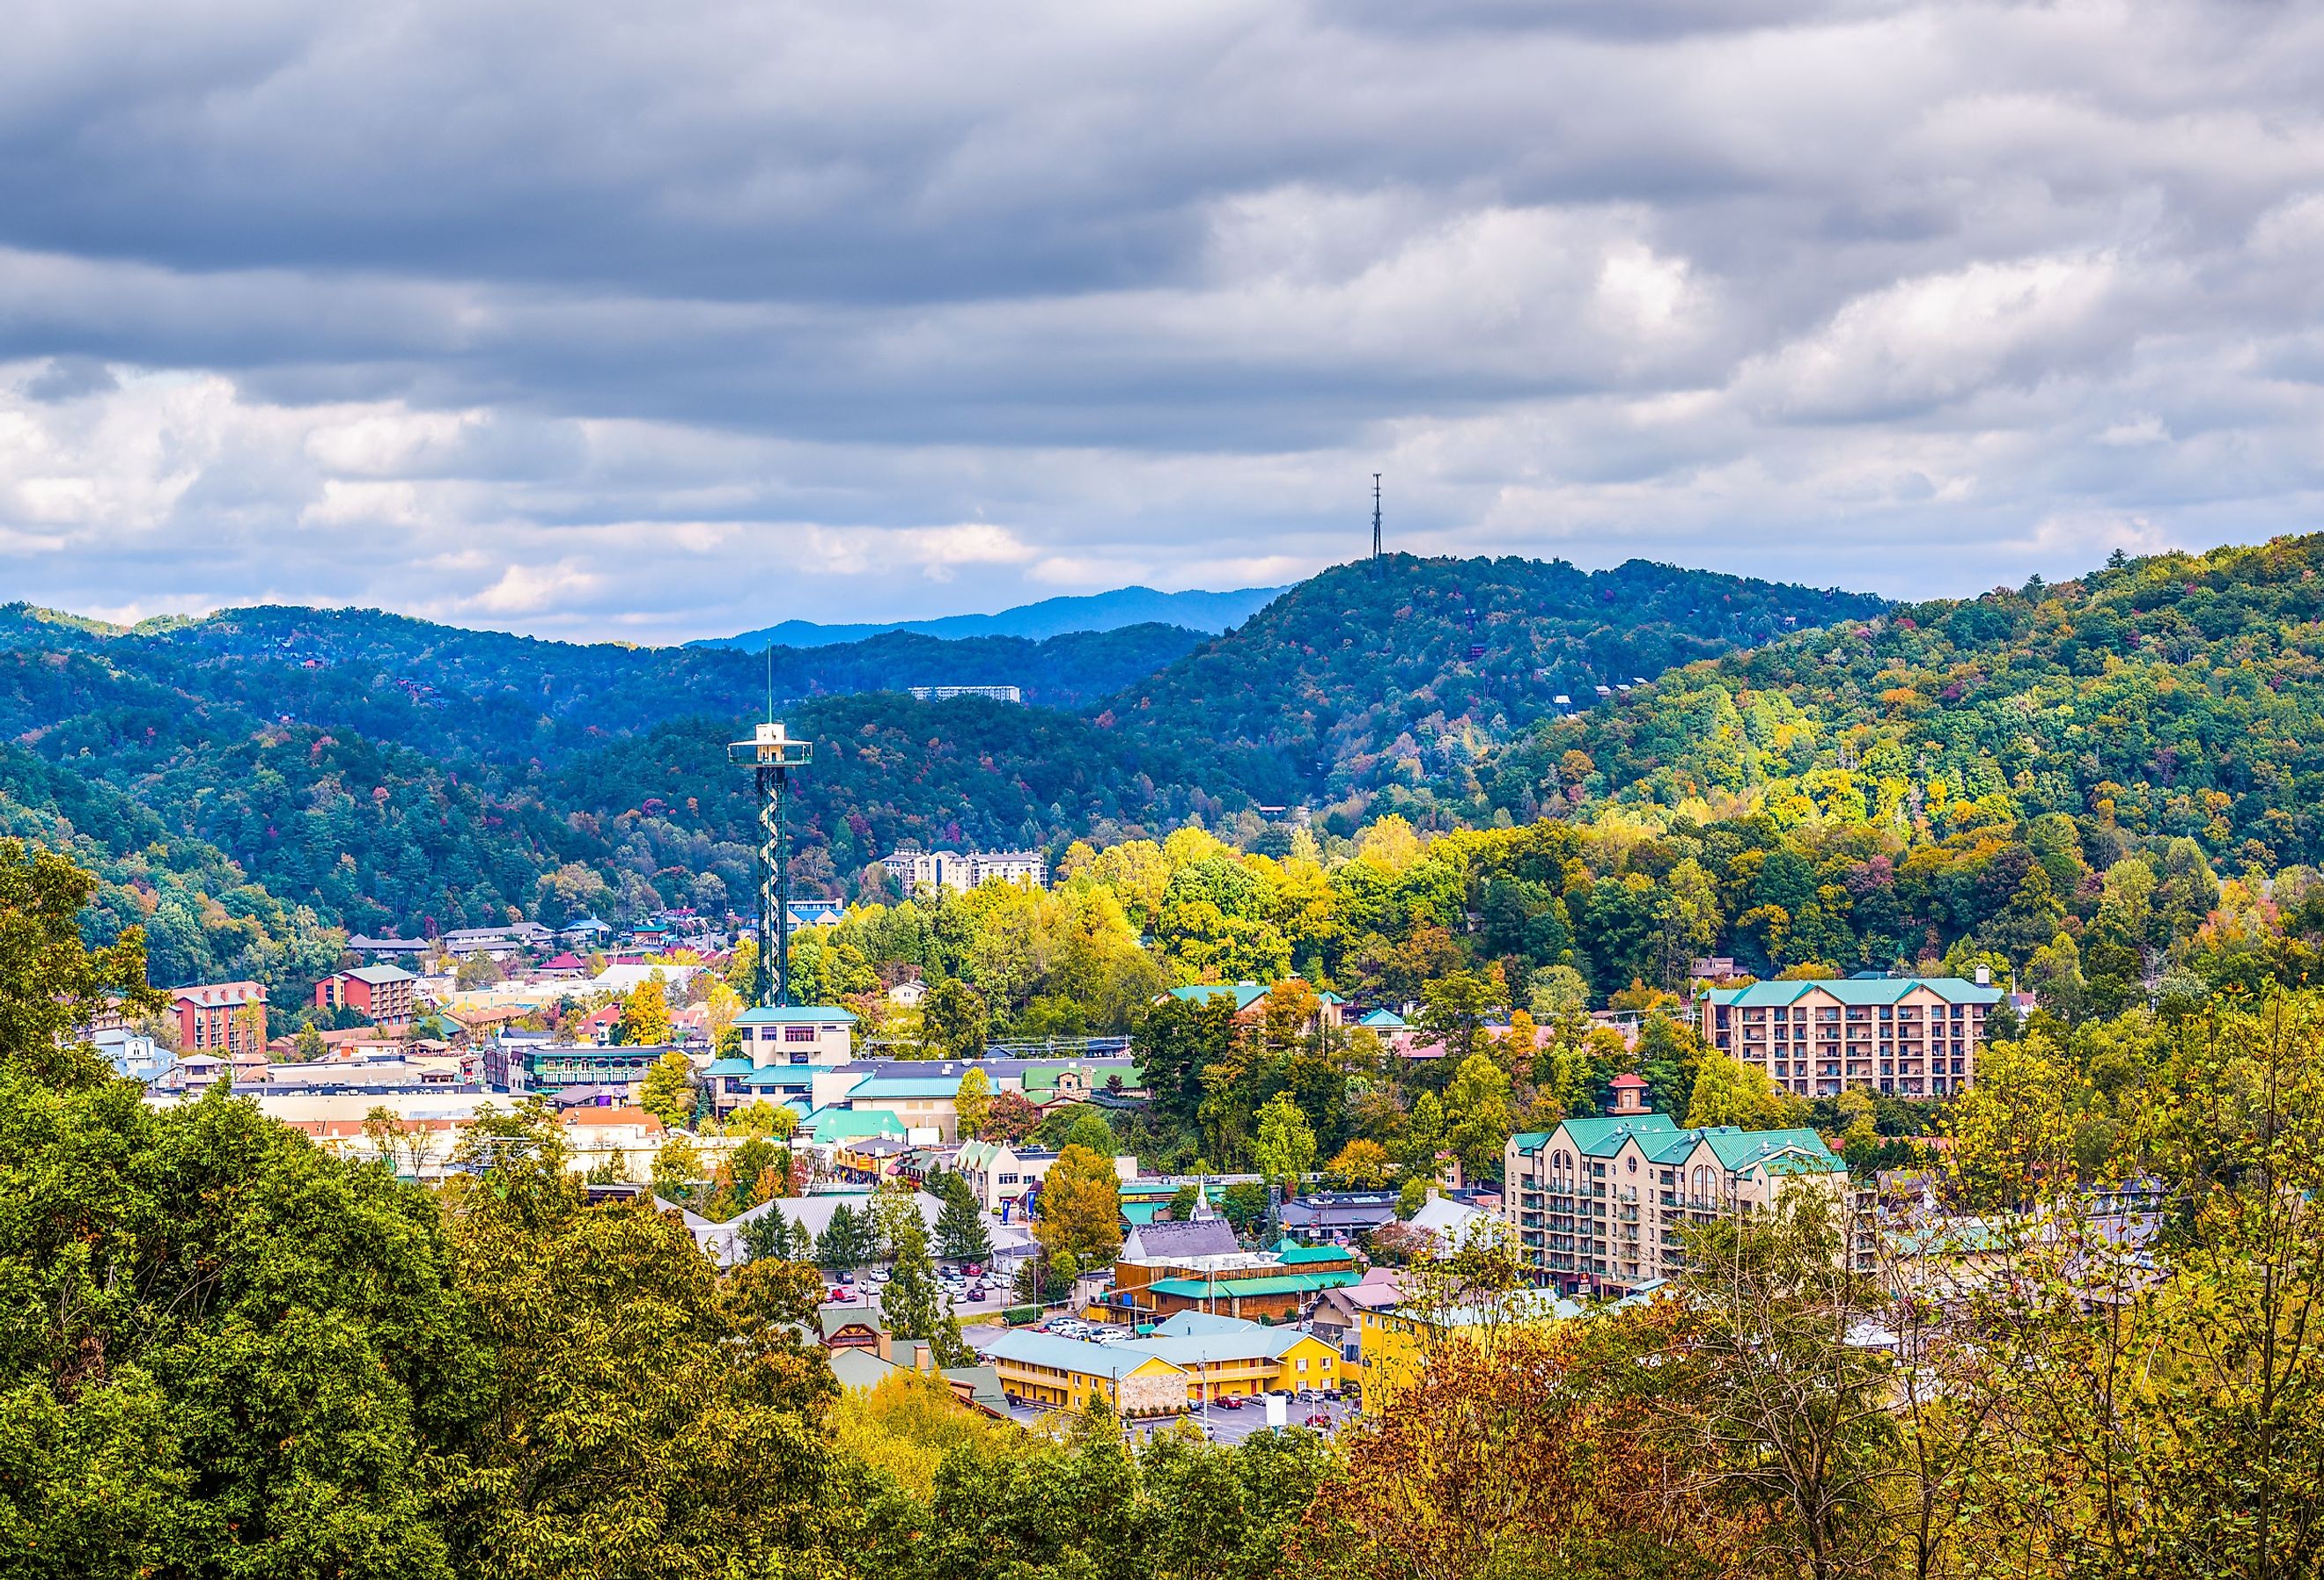 Gatlinburg, Tennessee town skyline in the Smoky Mountains. Image credit Sean Pavone via Shutterstock.